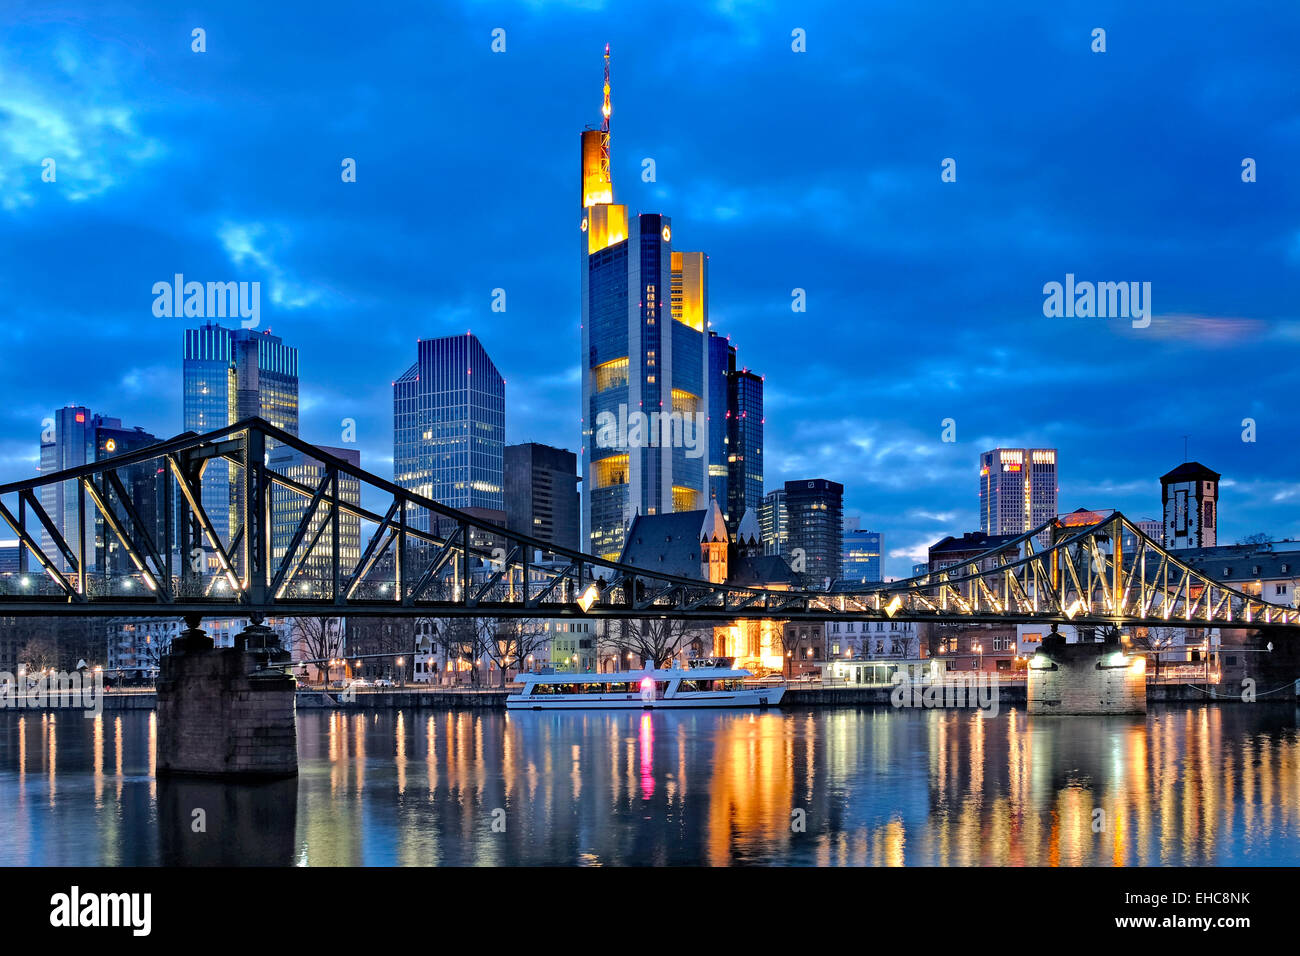 The River Main, Eiserner Steg Footbridge & Skyscrapers of Frankfurt's Business District, Frankfurt, Germany Stock Photo